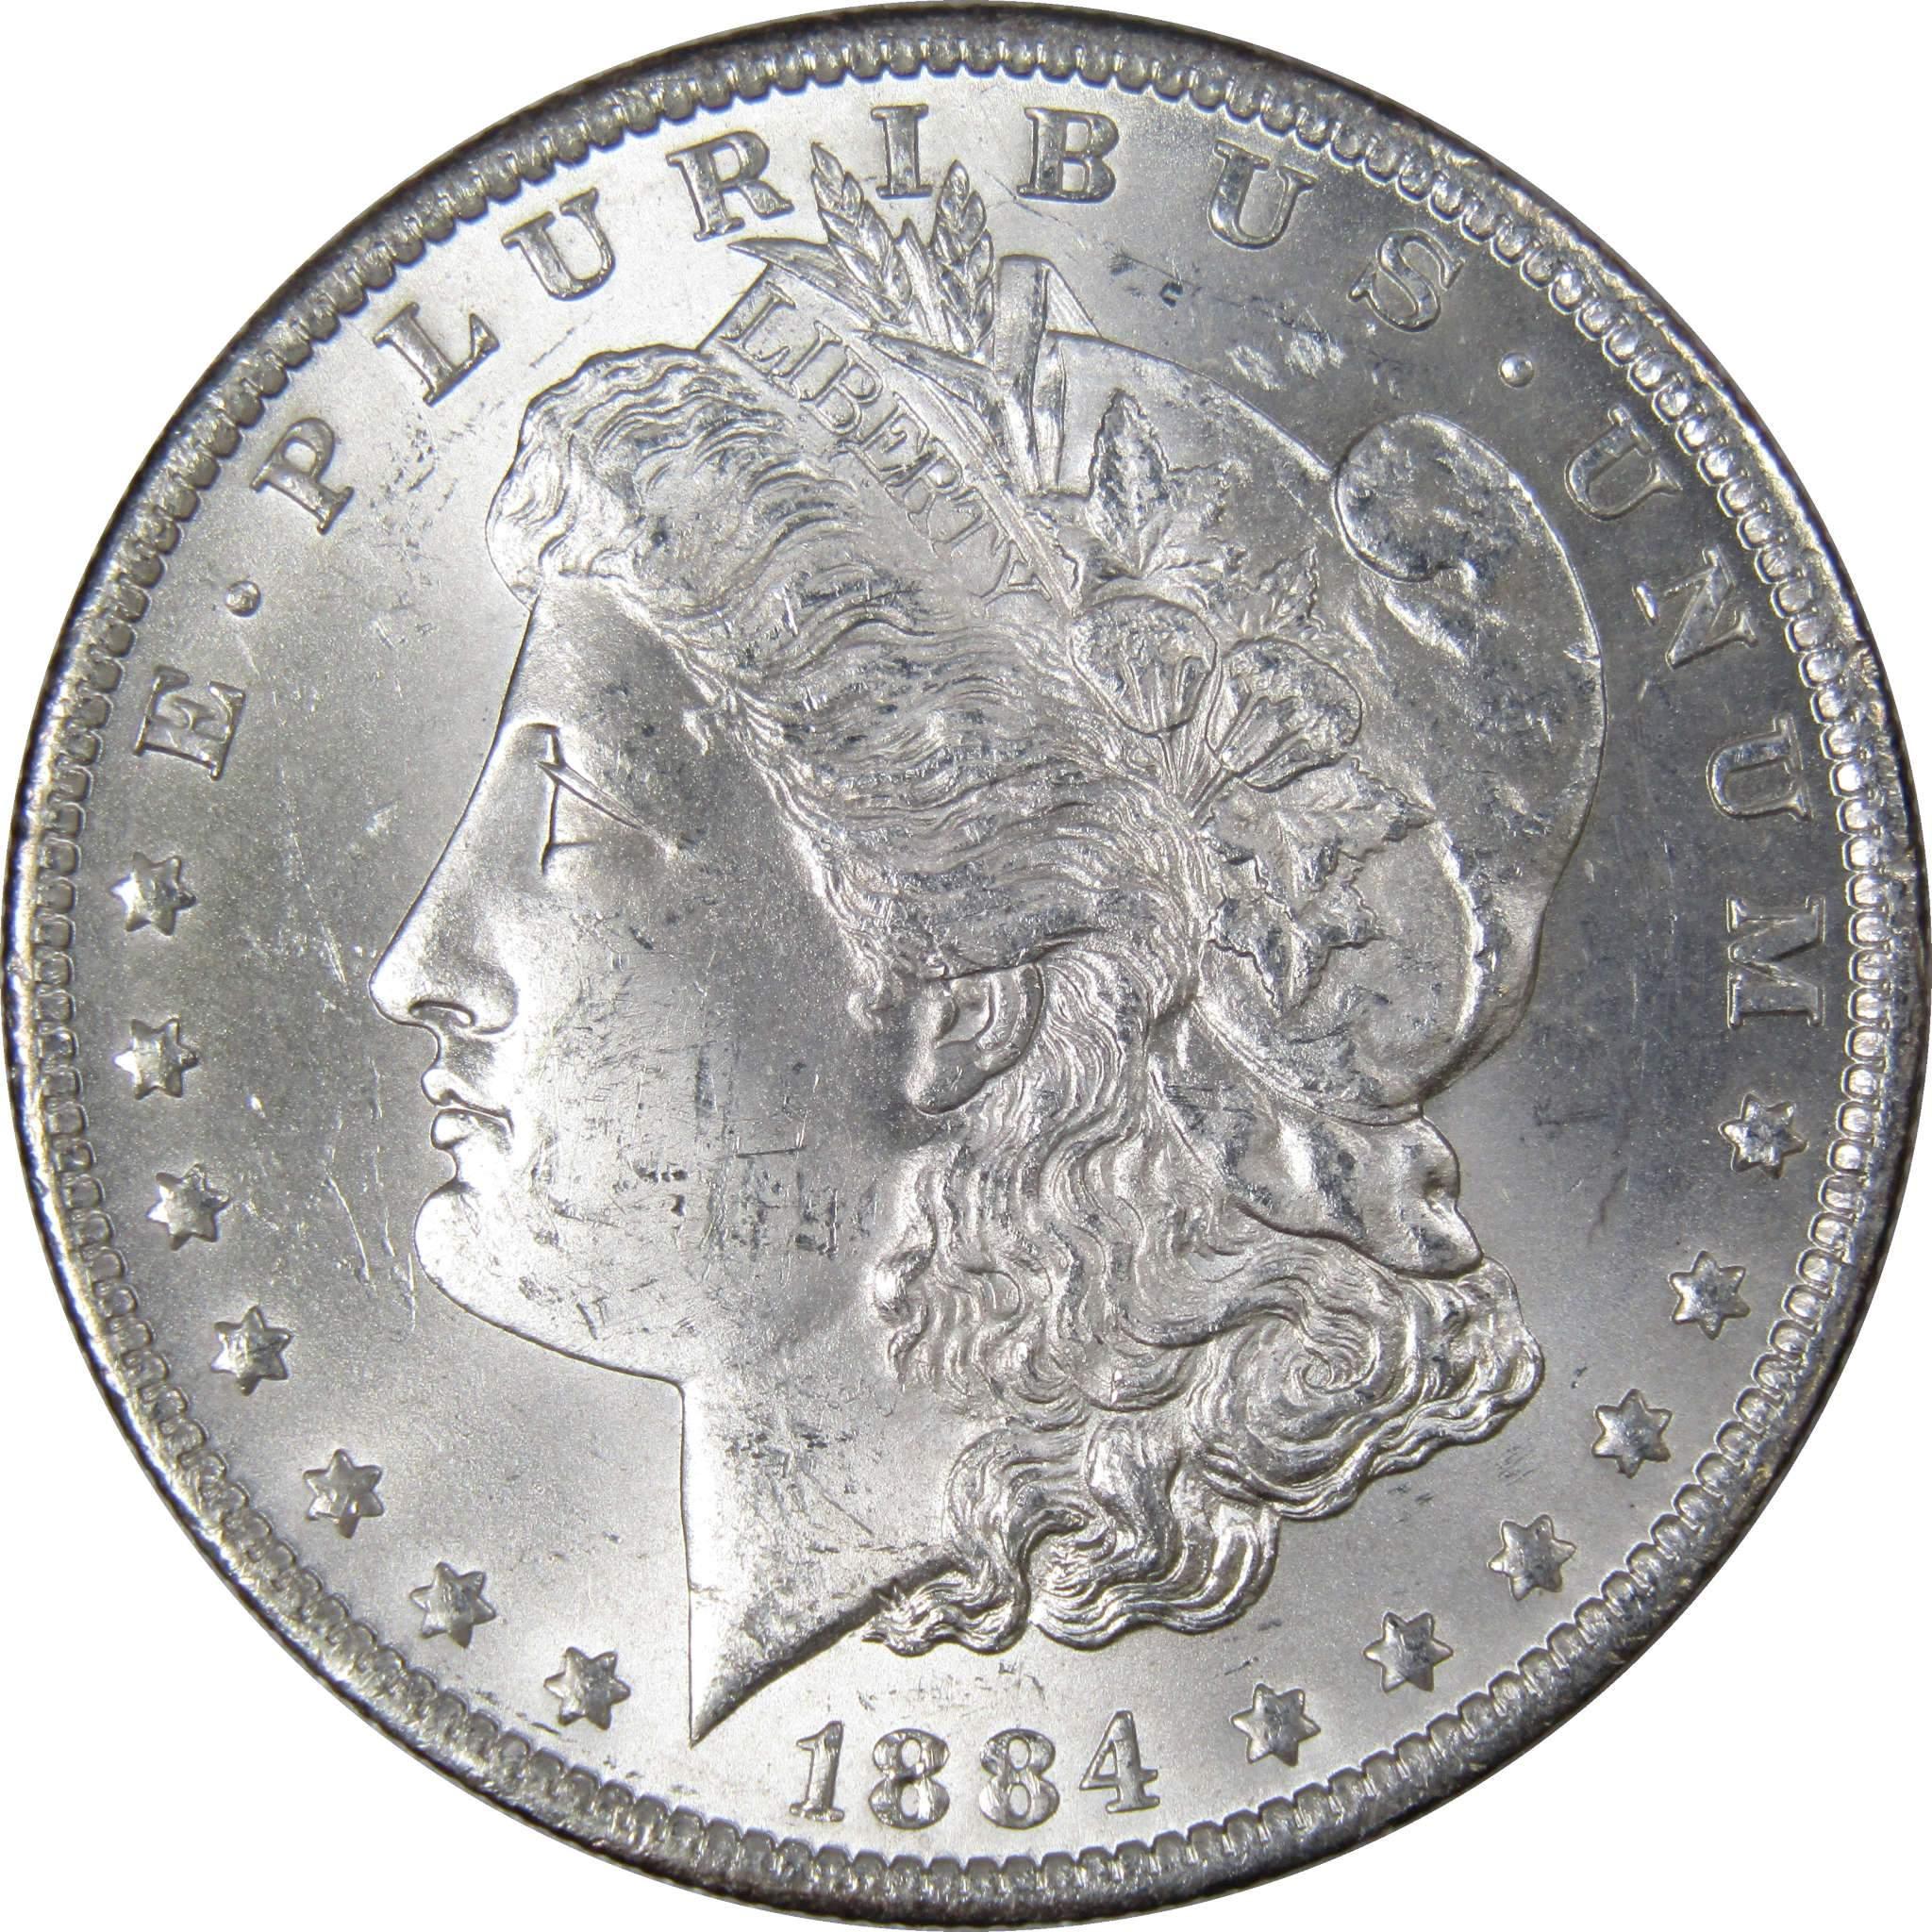 1884 O Morgan Dollar BU Very Choice Uncirculated Mint State 90% Silver $1 Coin - Morgan coin - Morgan silver dollar - Morgan silver dollar for sale - Profile Coins &amp; Collectibles